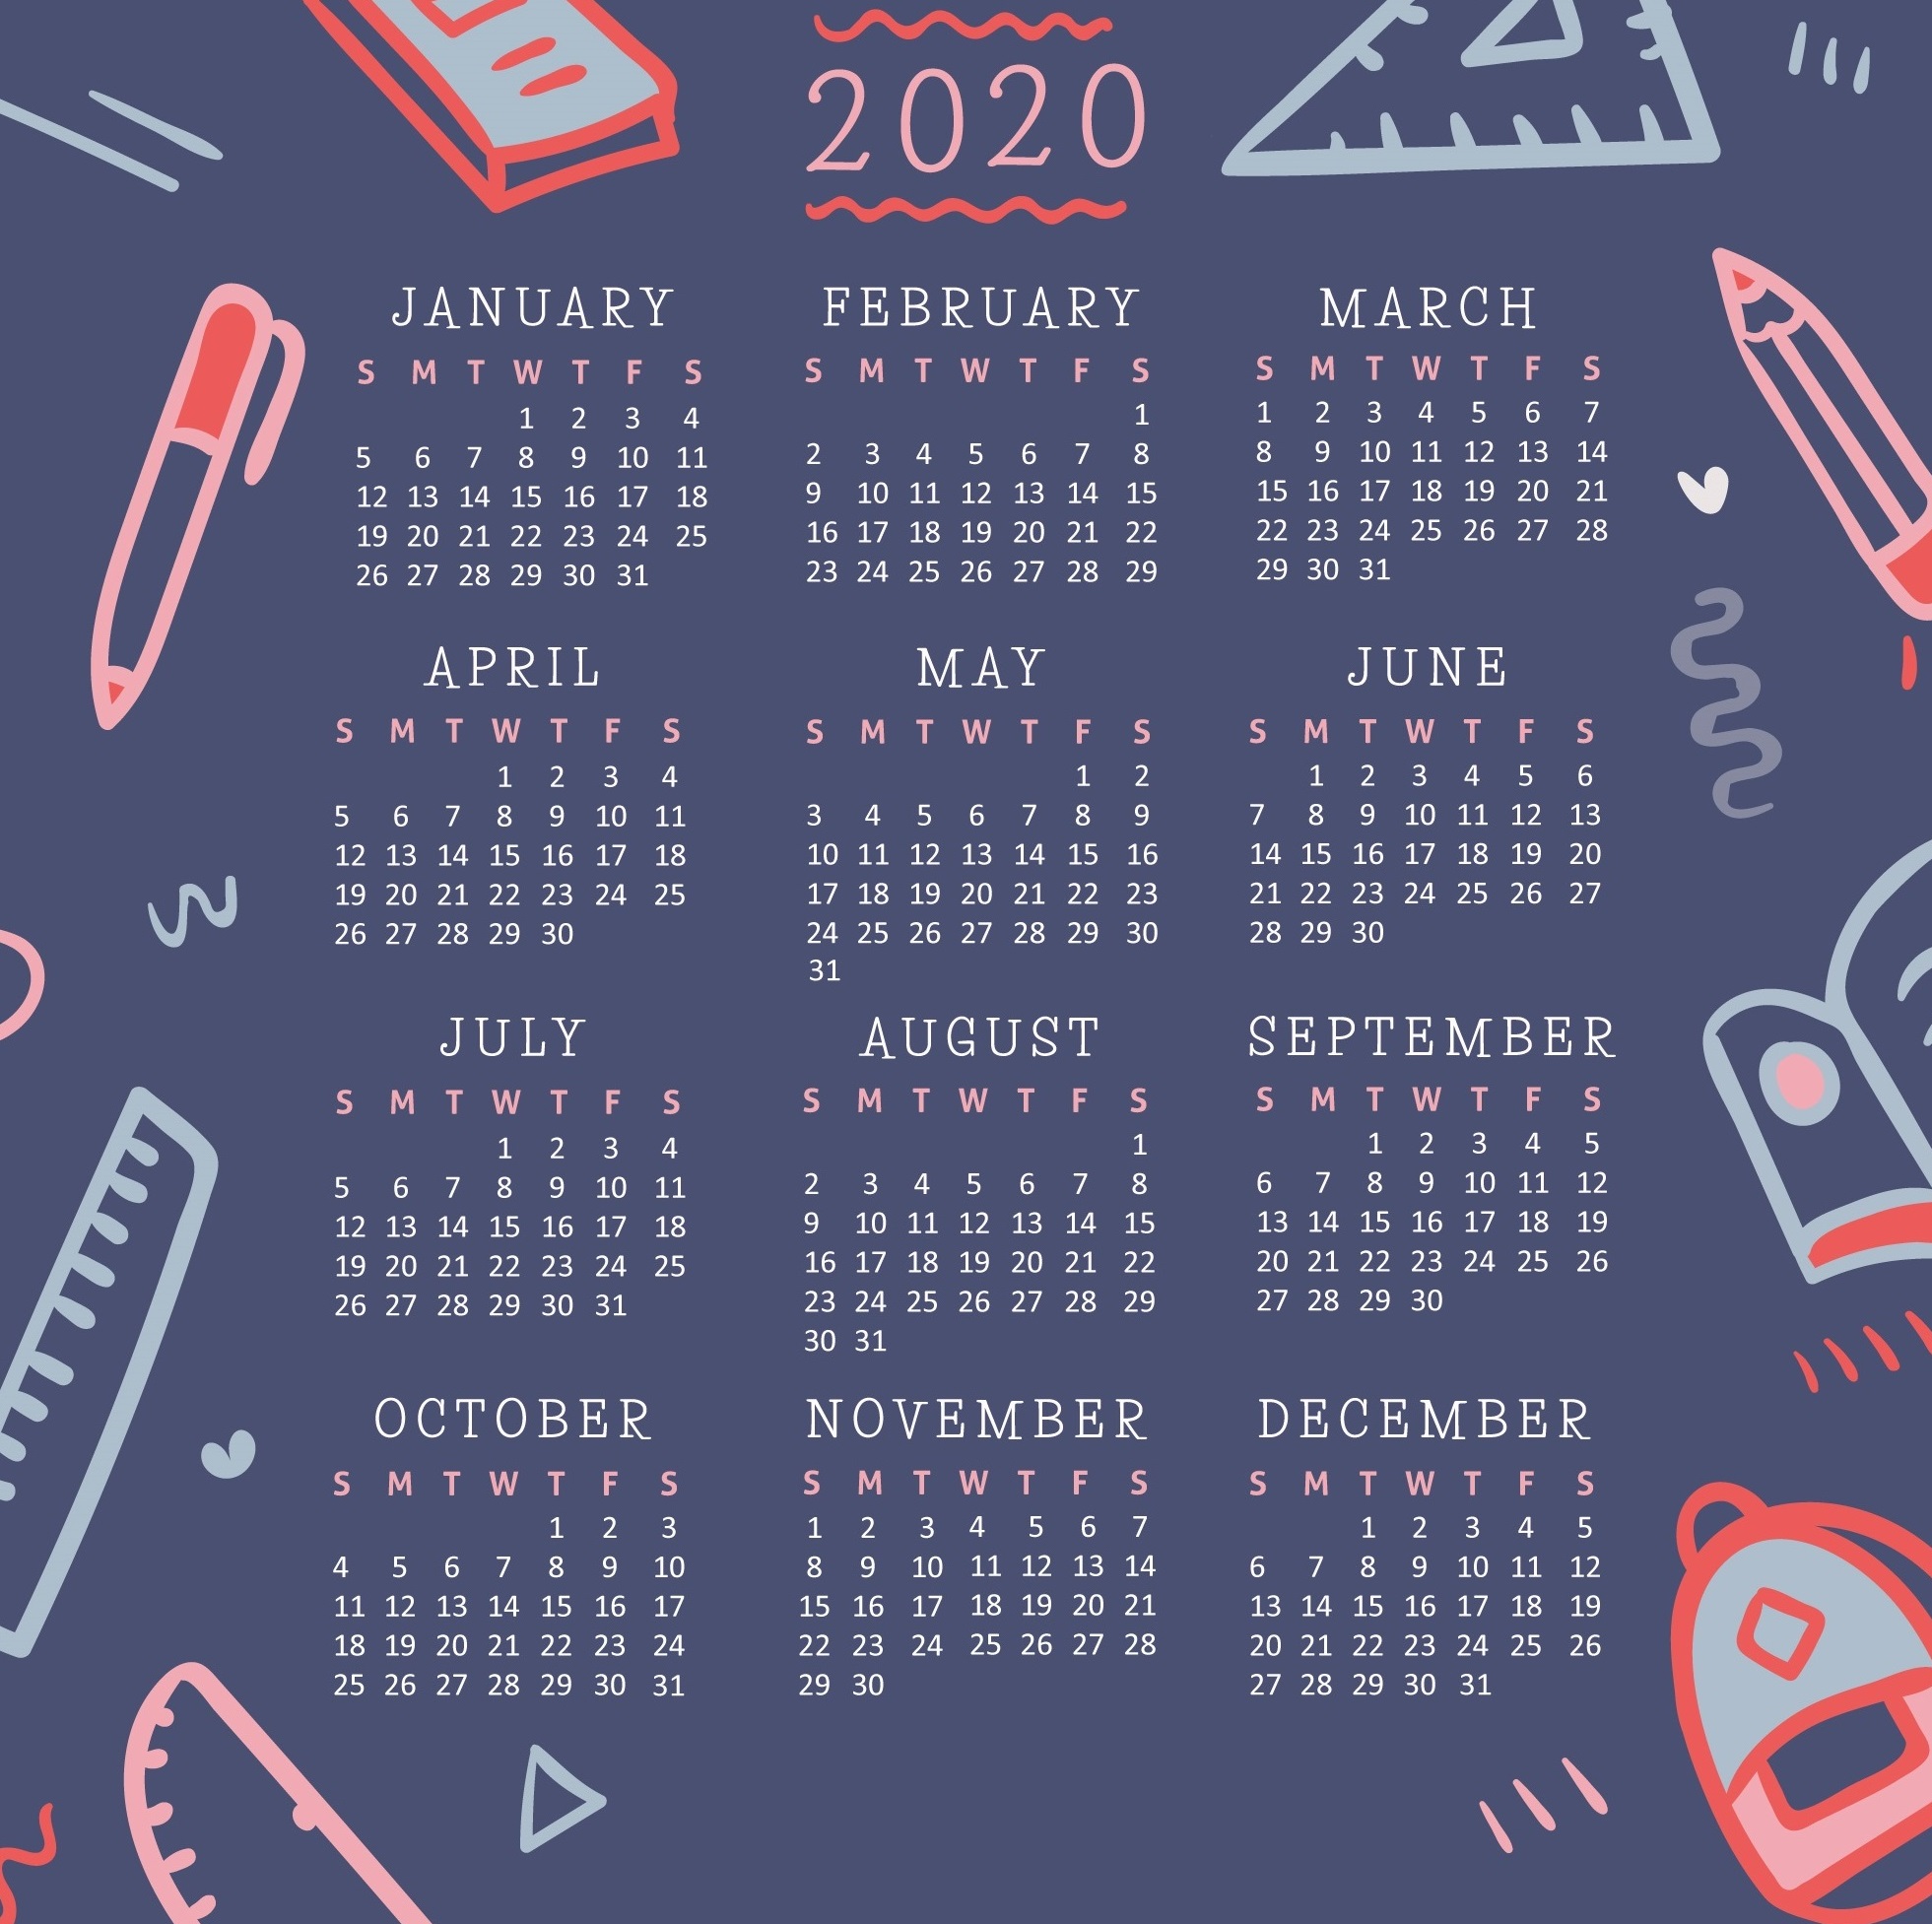 53] Calendar 2020 Wallpapers on